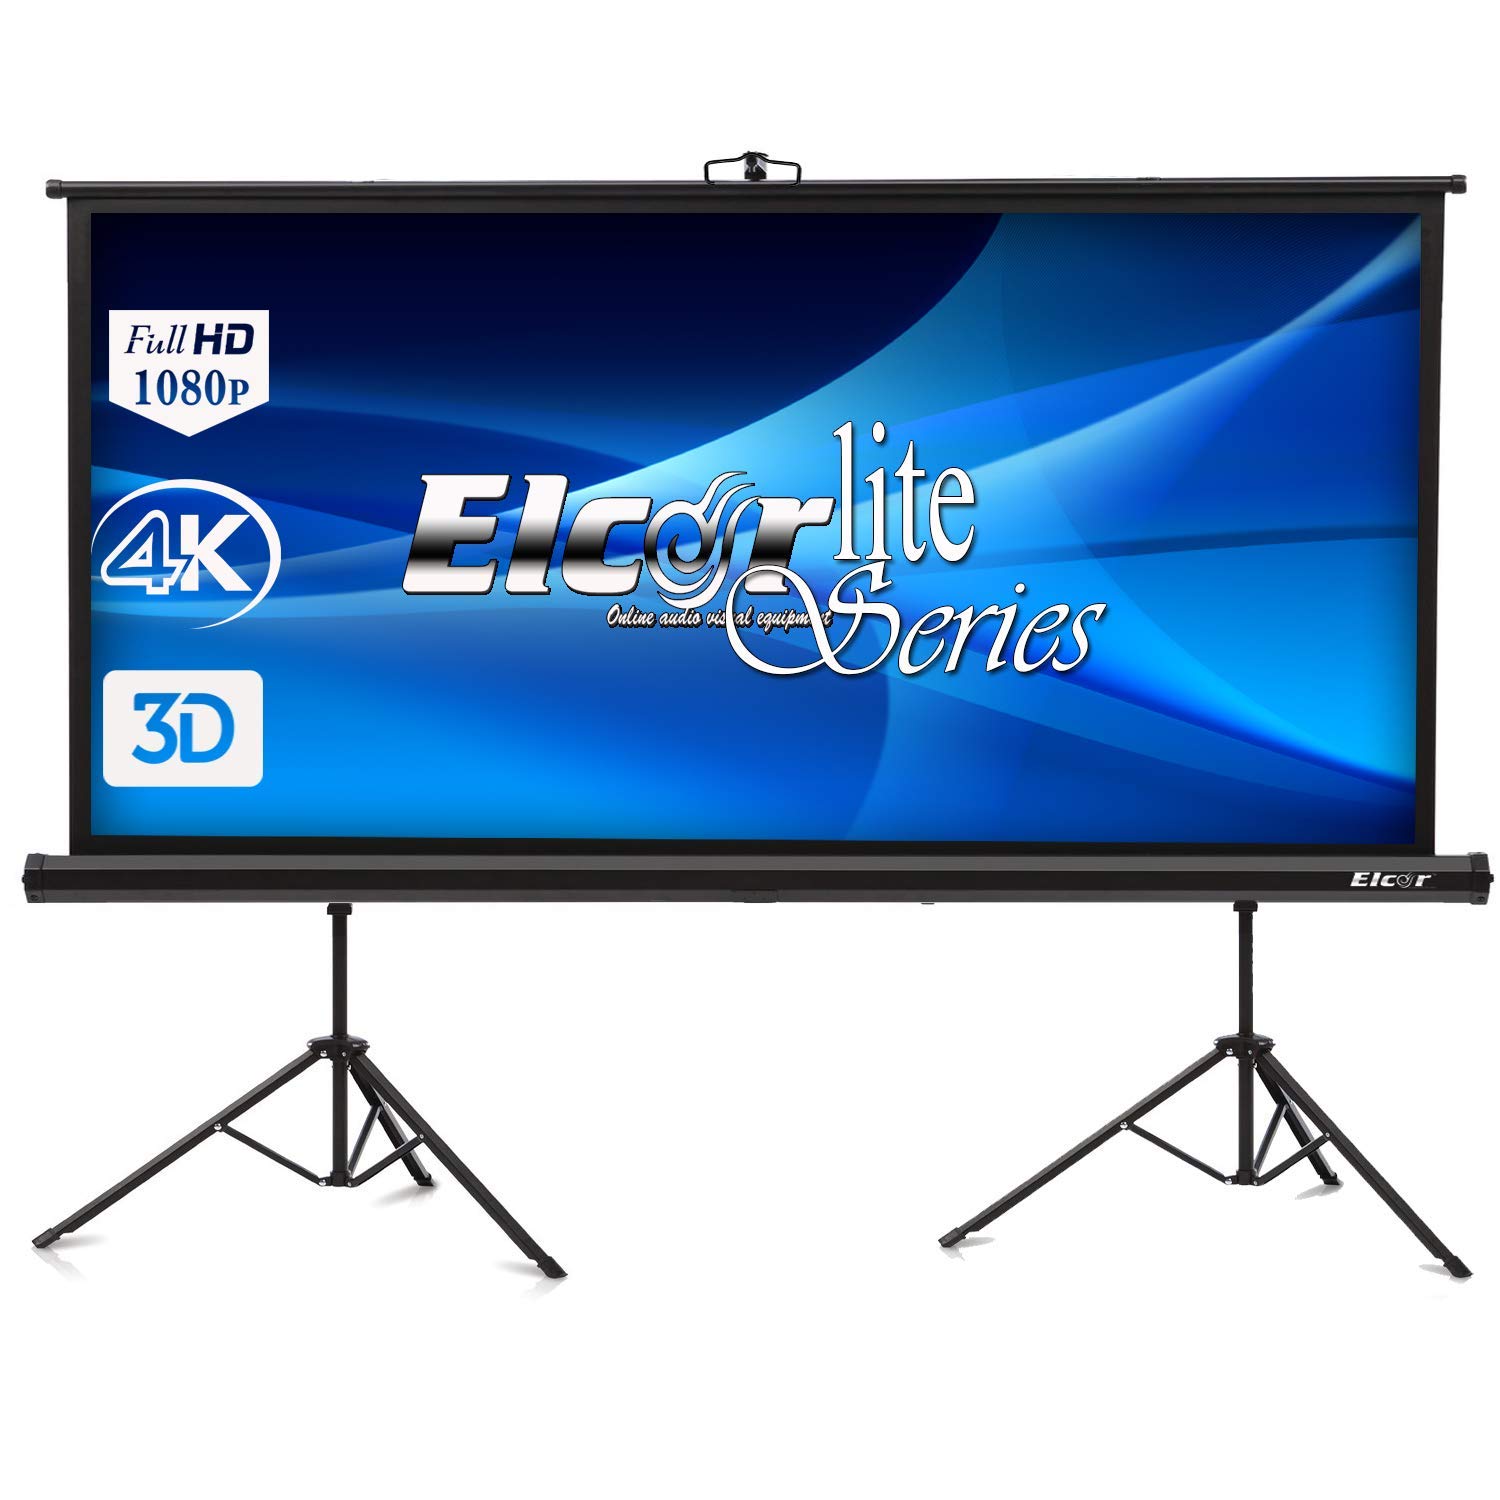 ELCOR lite series Dual tripod/Portable projector screen 133- Inch Diagonal  In 16:09 format, UltraHD/4k tech. - Elcor screen Manufacturer In India